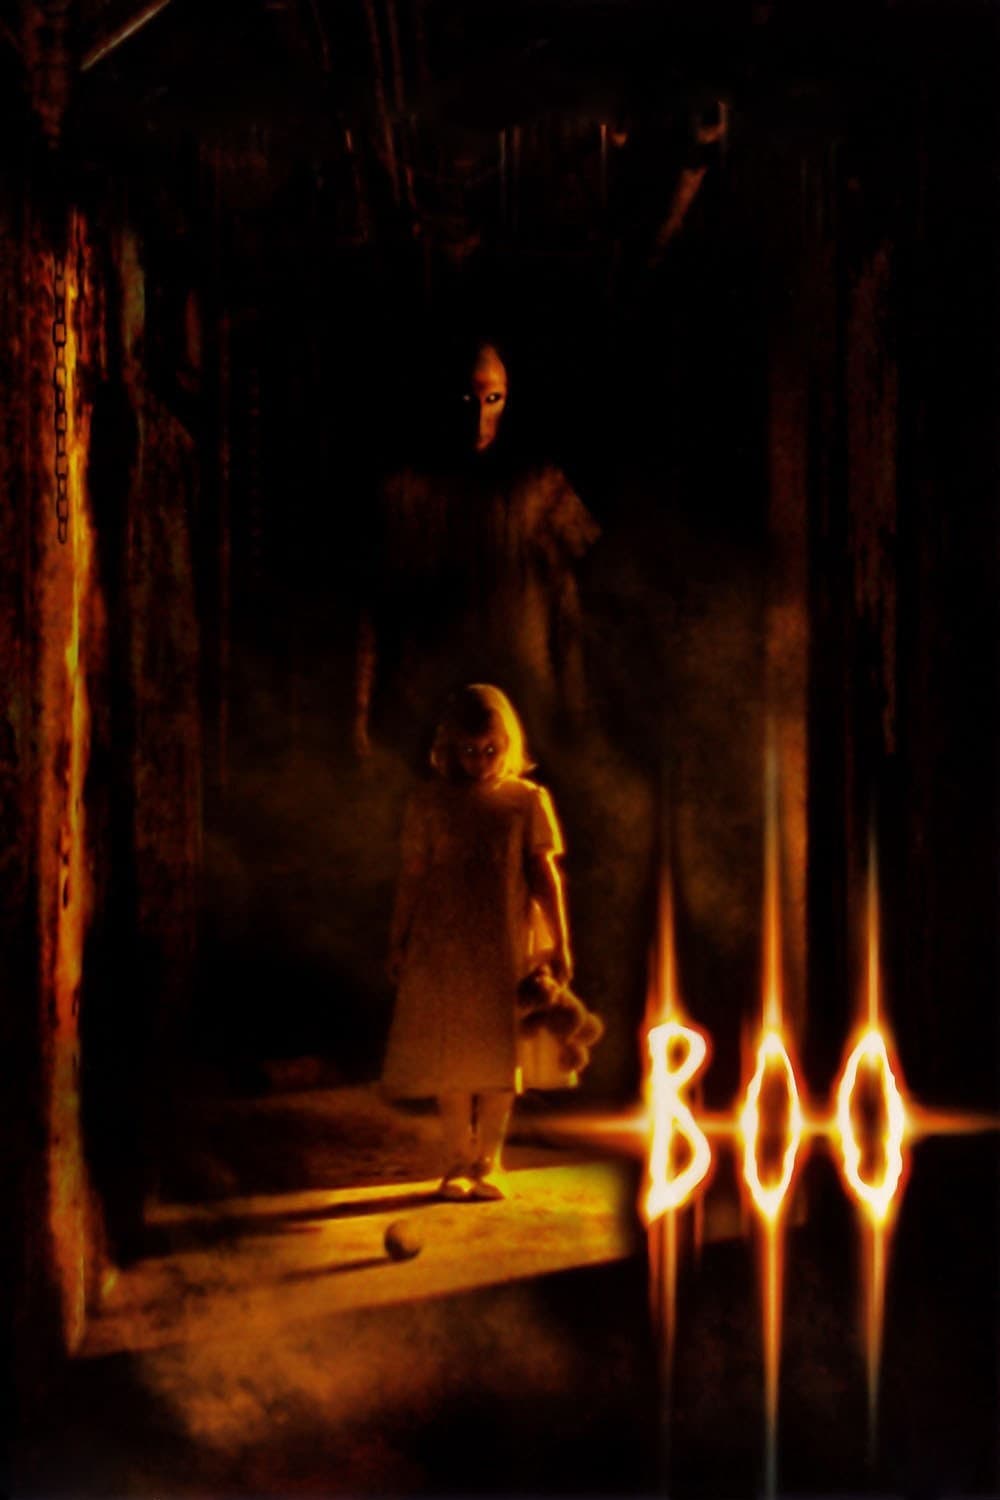 Boo (2005)